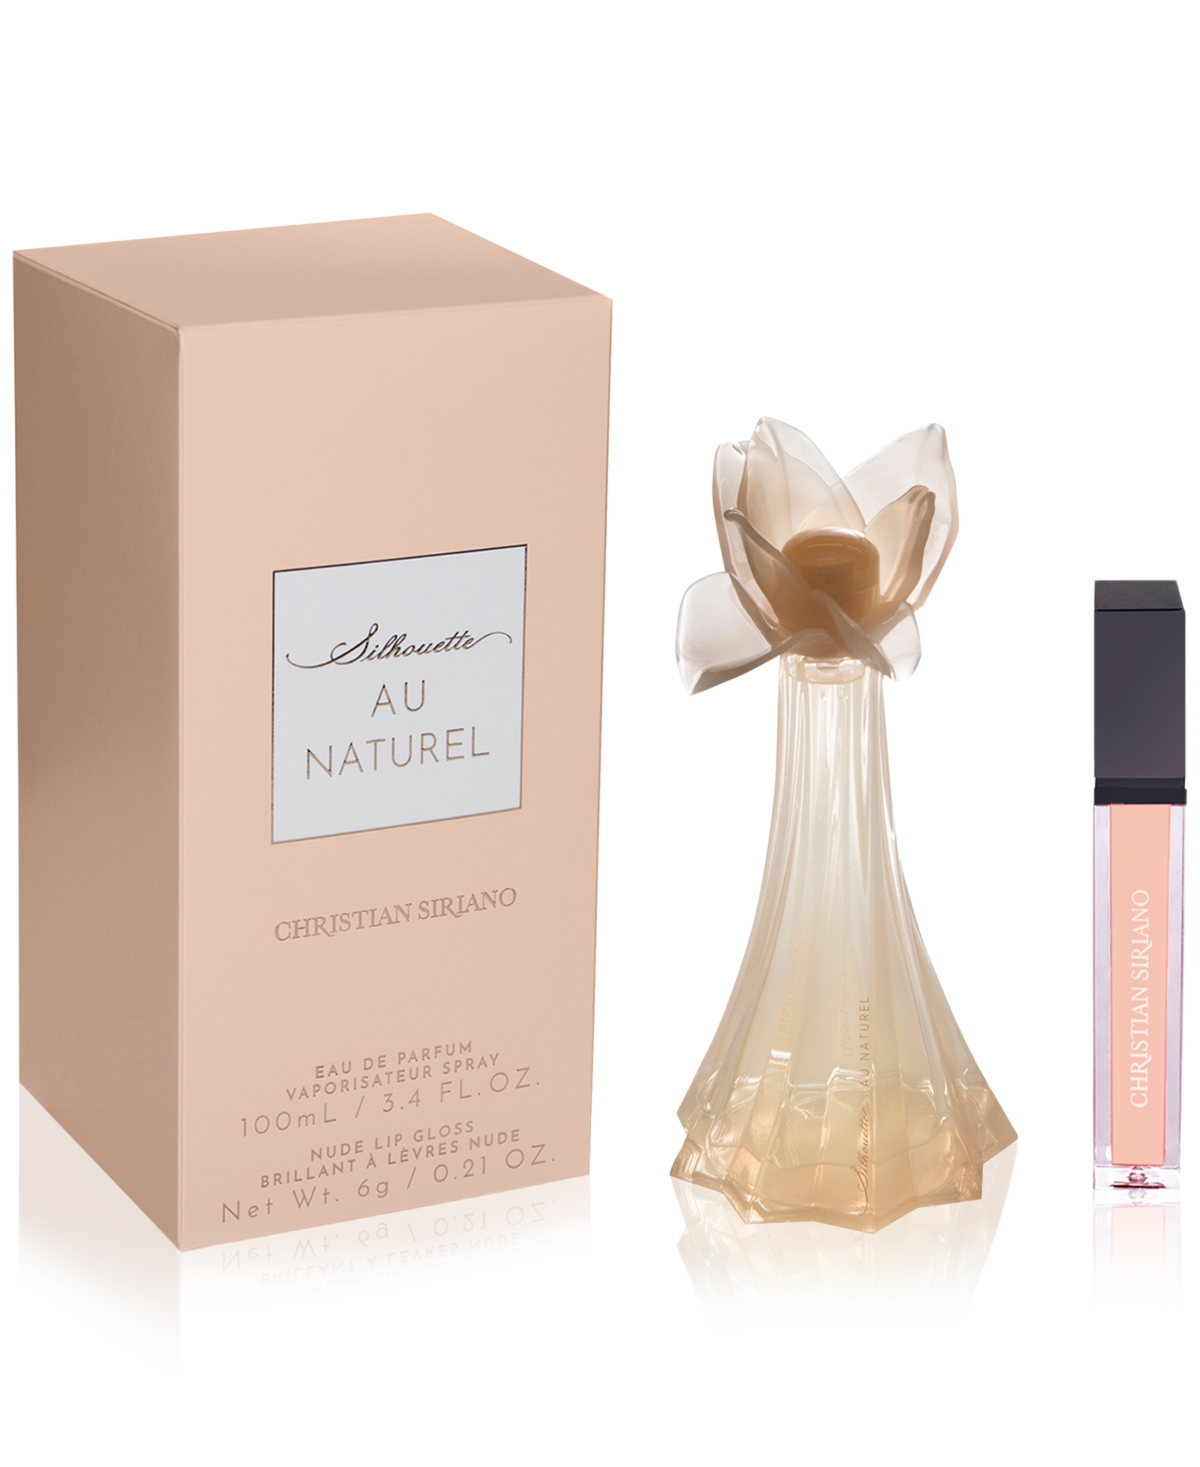 Christian Siriano 2-pc. Silhouette Au Naturel Eau De Parfum Gift Set